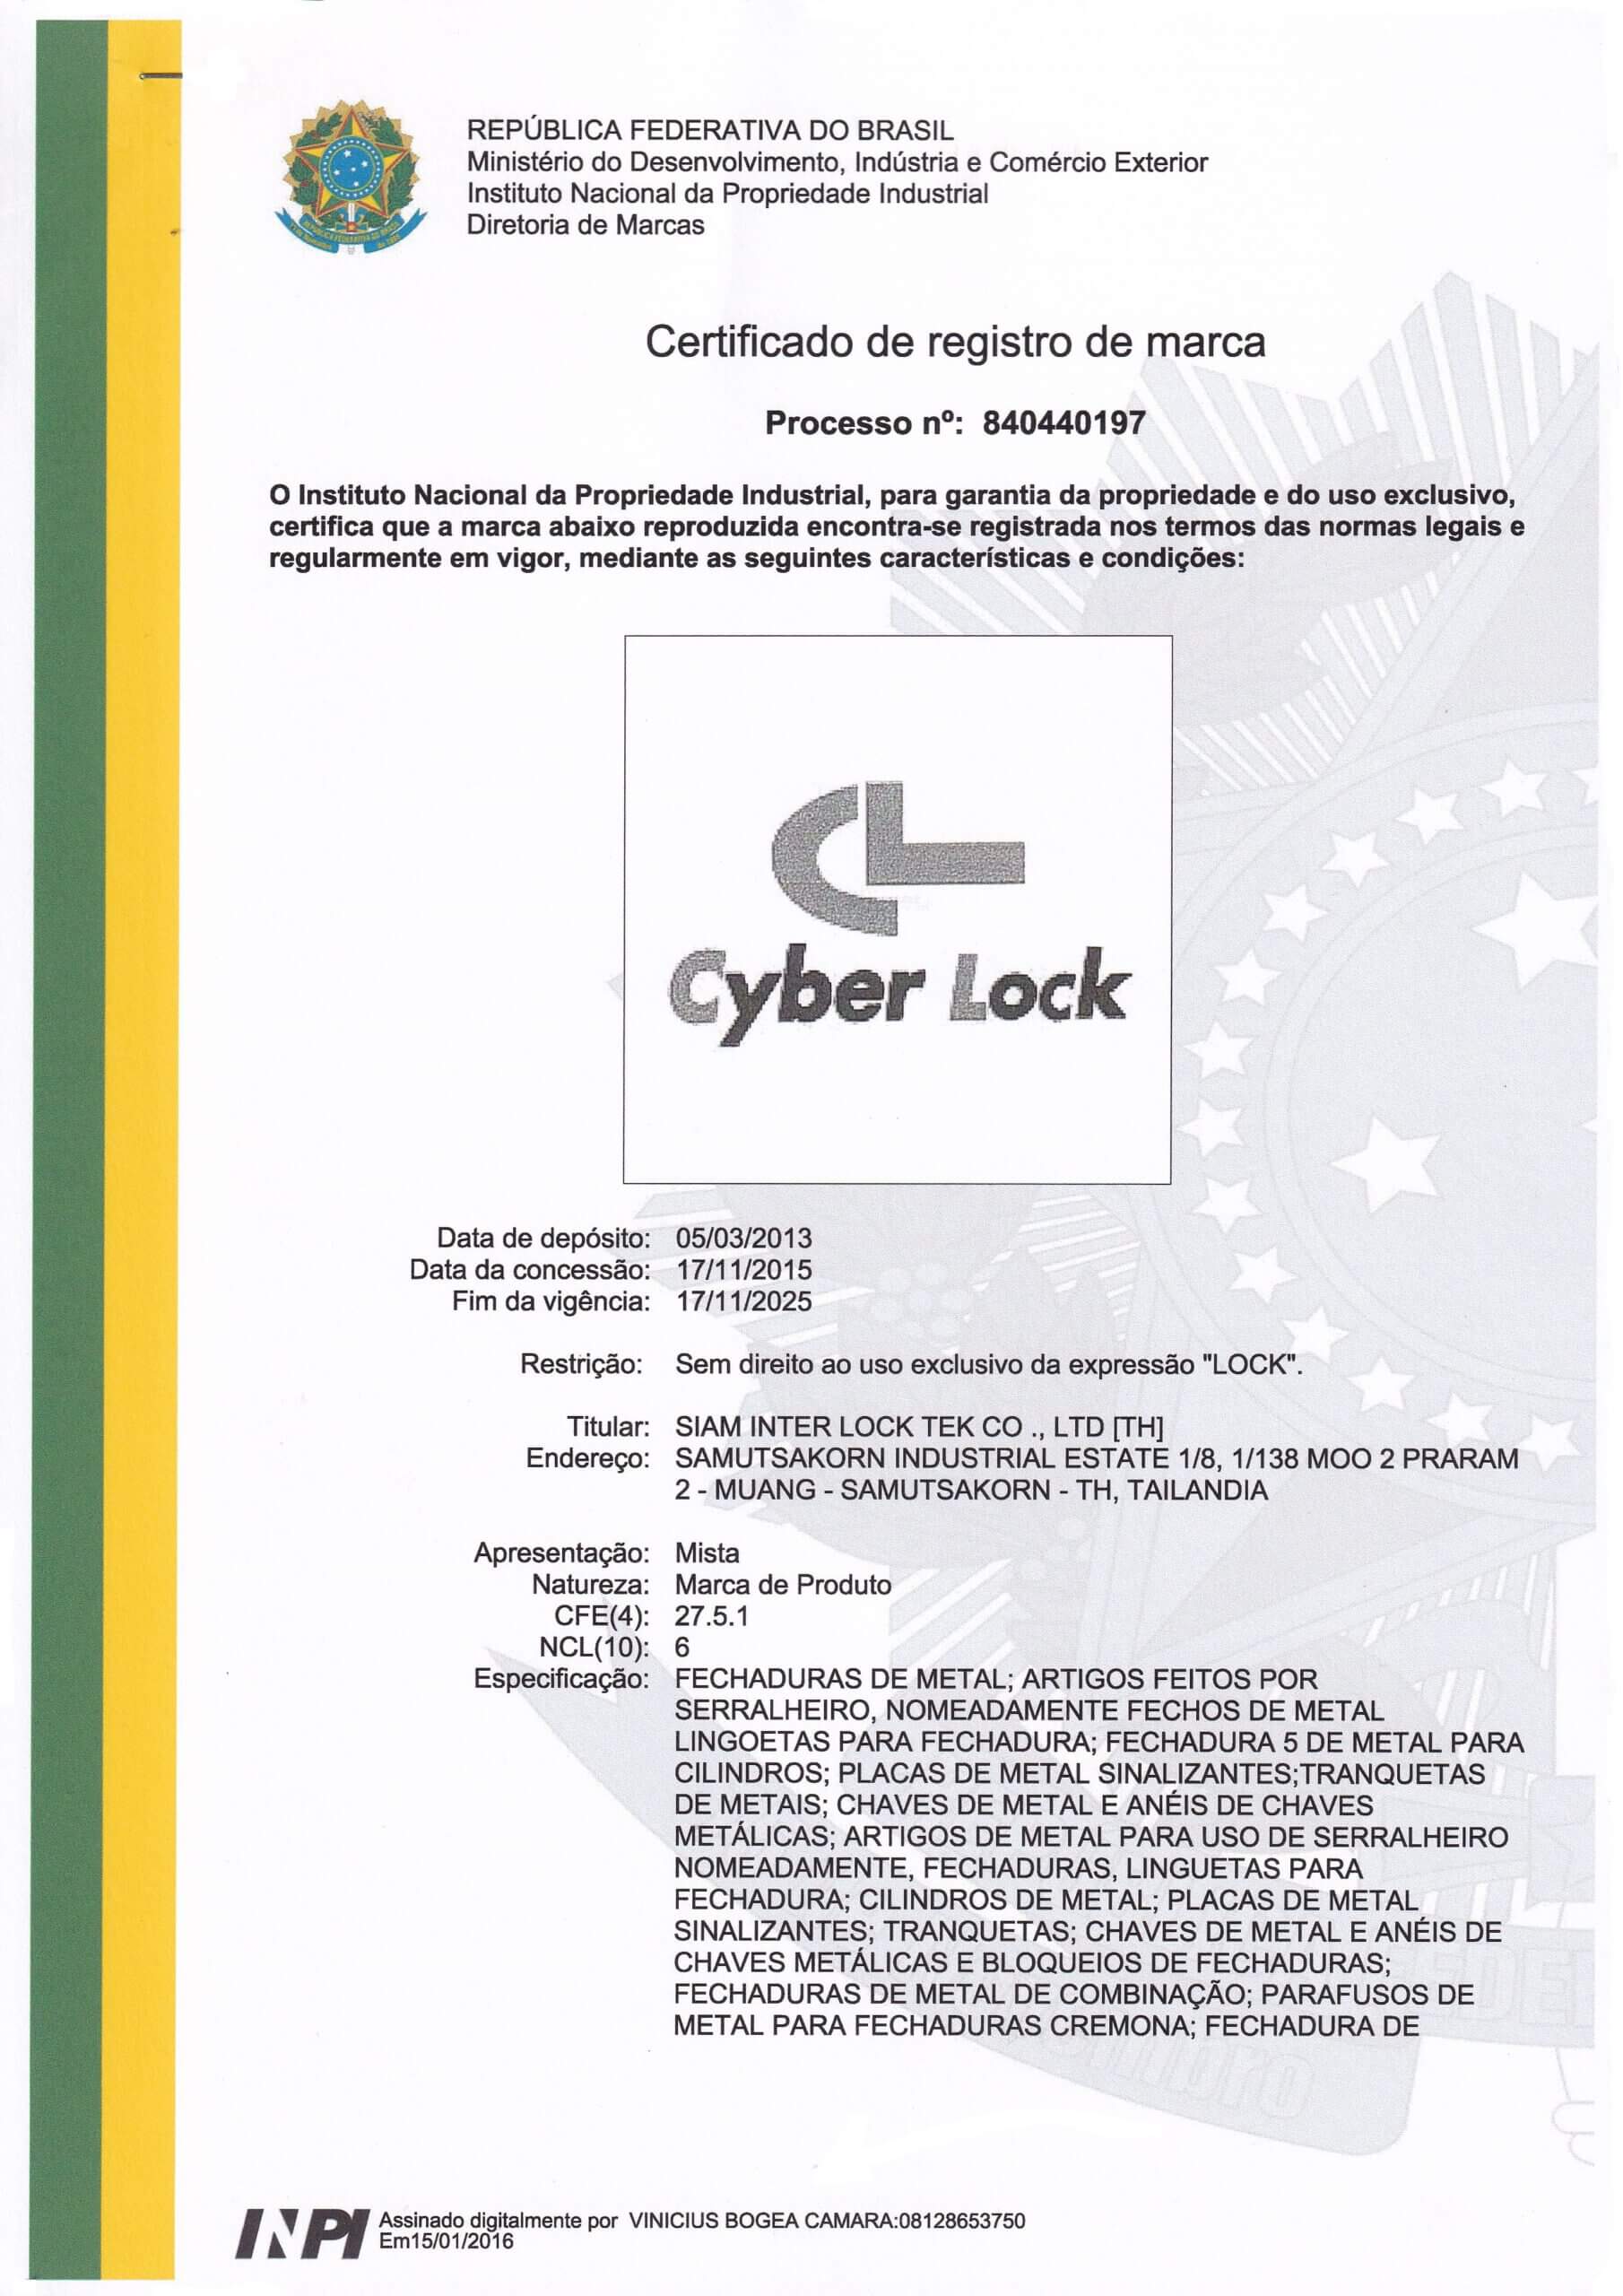 Cyber Lock_Brazil